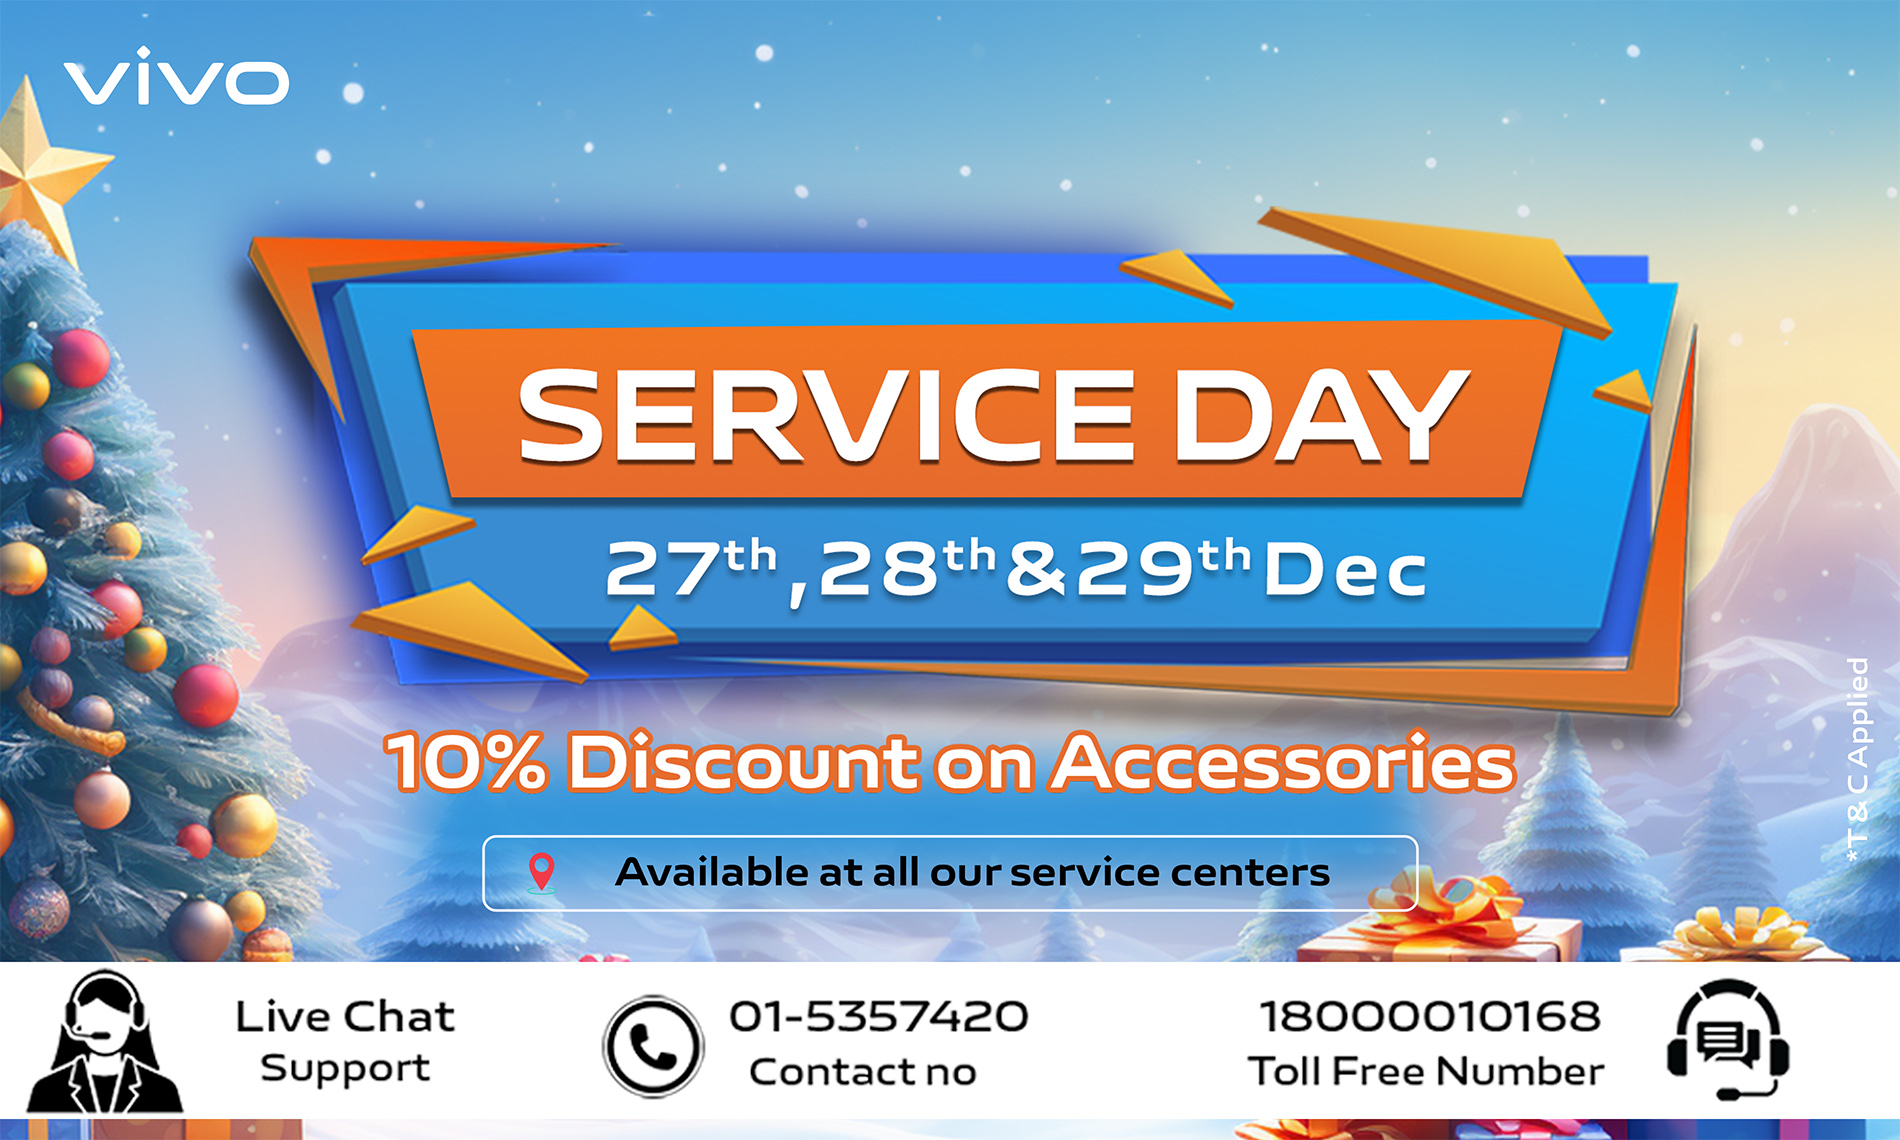 vivo Service Day Benefits in December